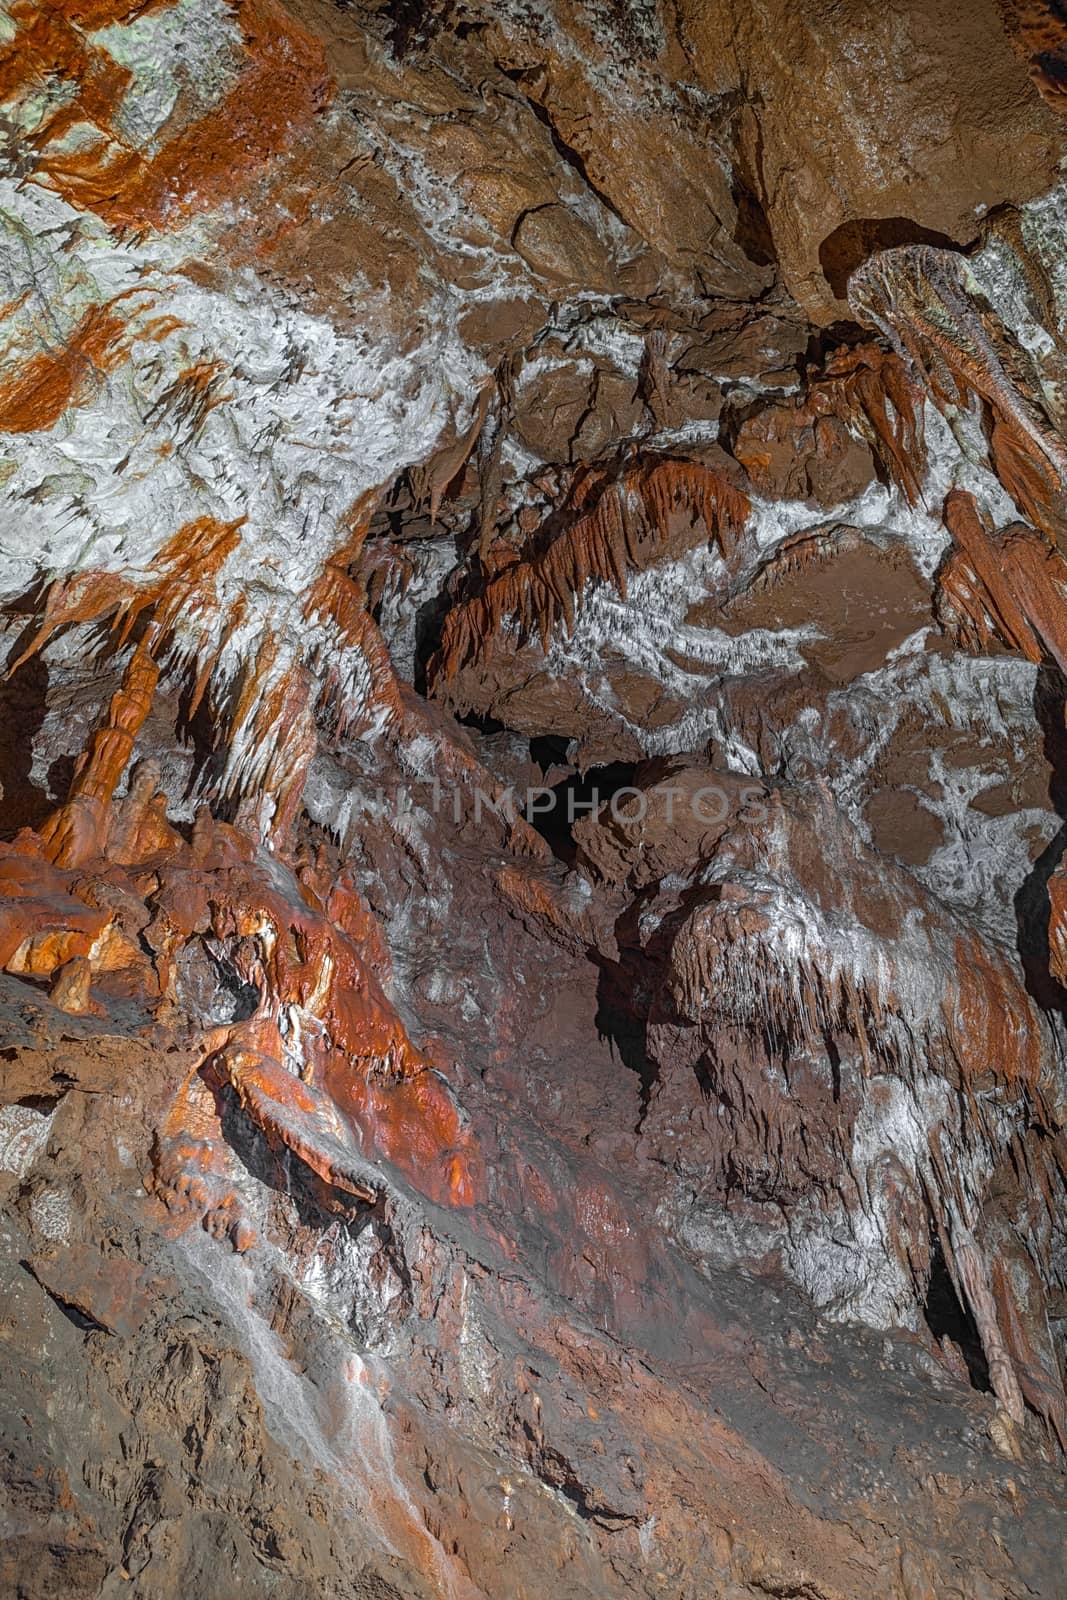 Underground cave texture closeup photo by svedoliver